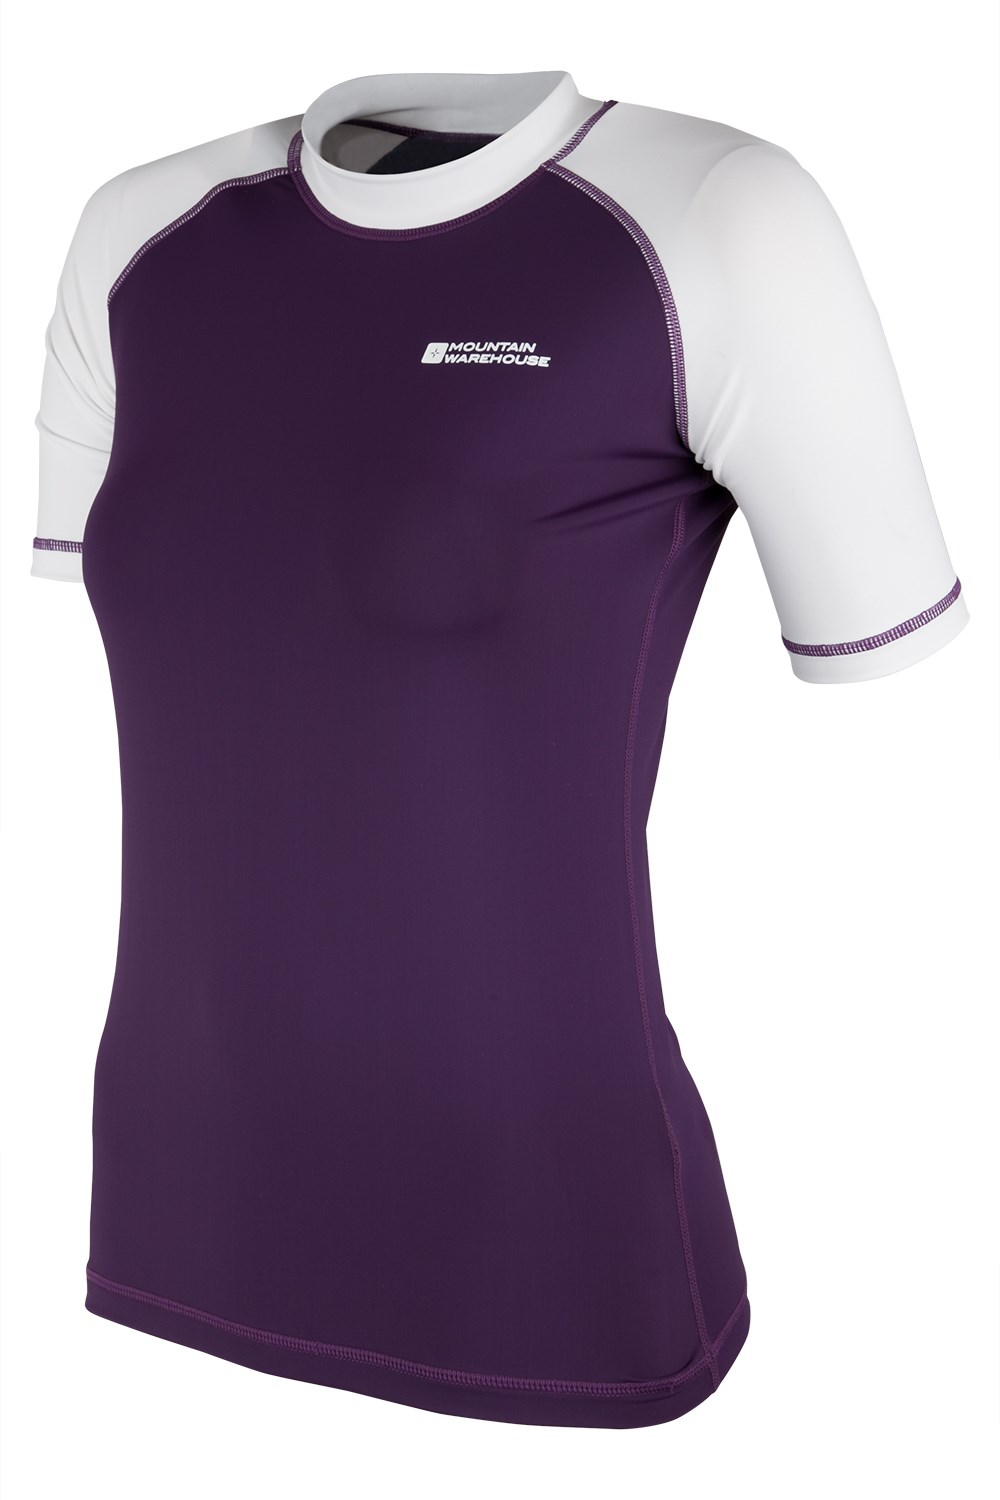 Mountain Warehouse Womens Lightweight Stretch Zip Rash Vest w/ UPF50 Protection 